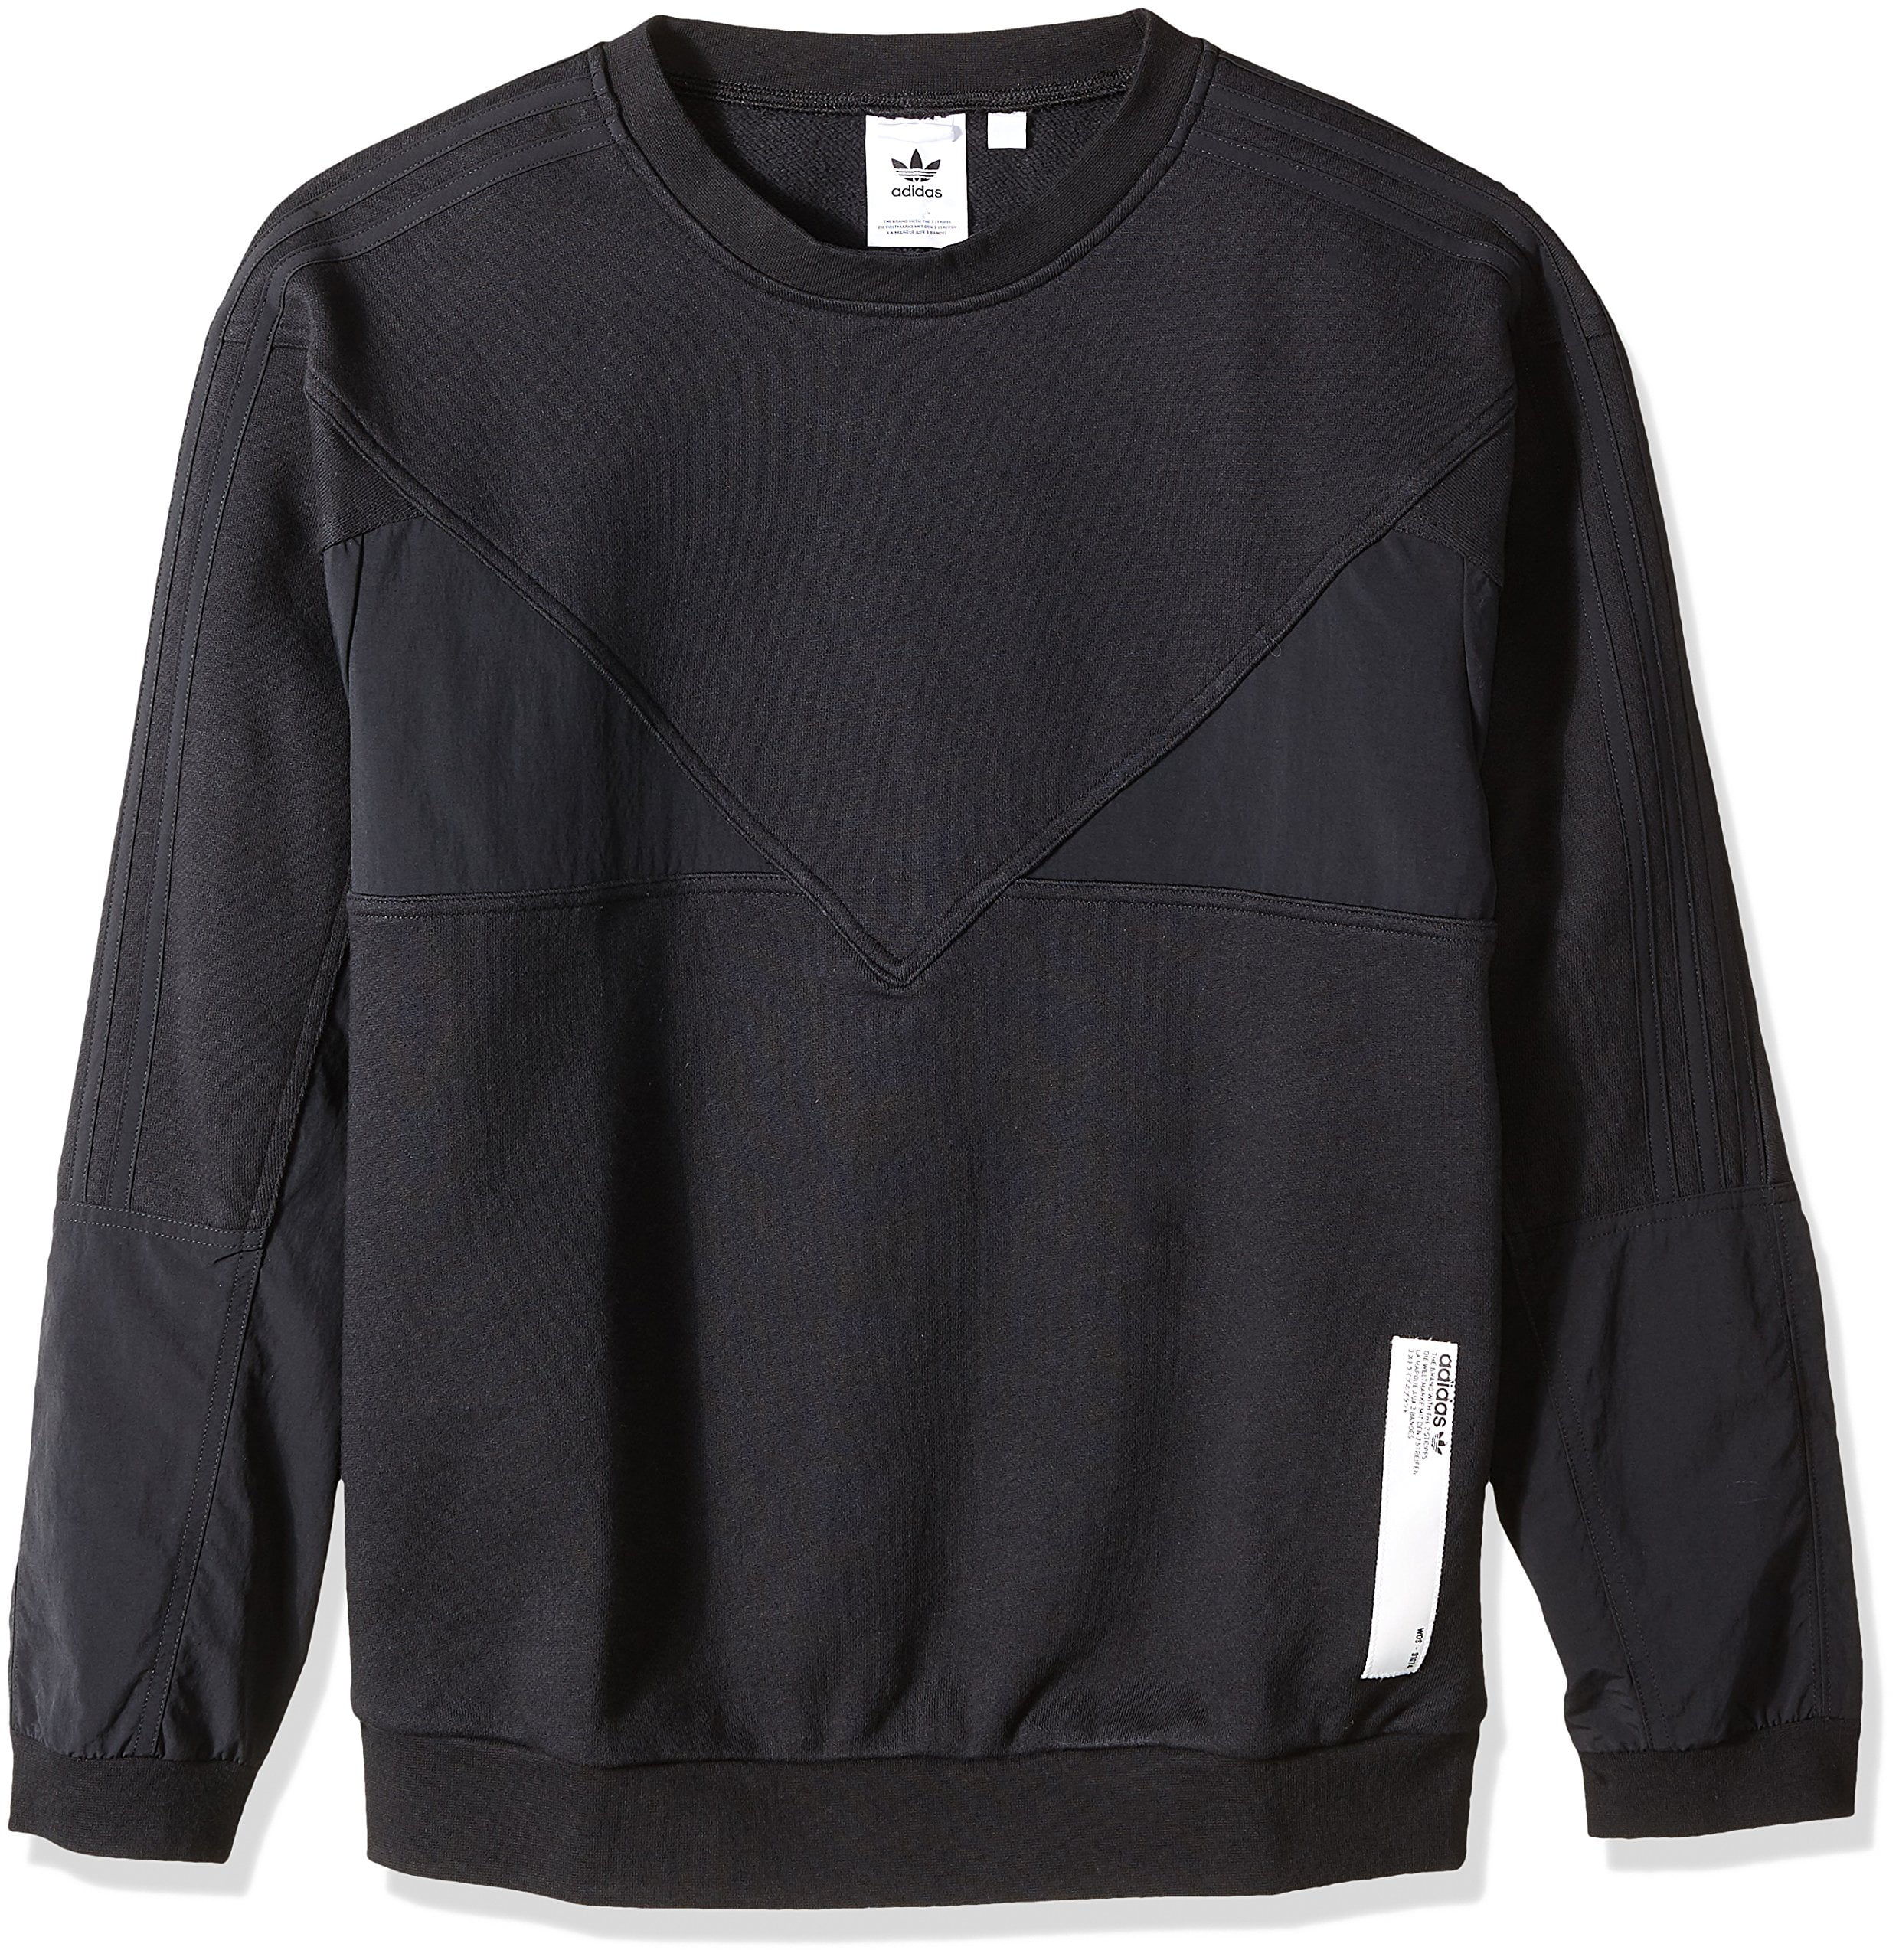 Adidas Hoodies & Sweatshirts - Mens Sweatshirt Deep Cotton Crewneck ...